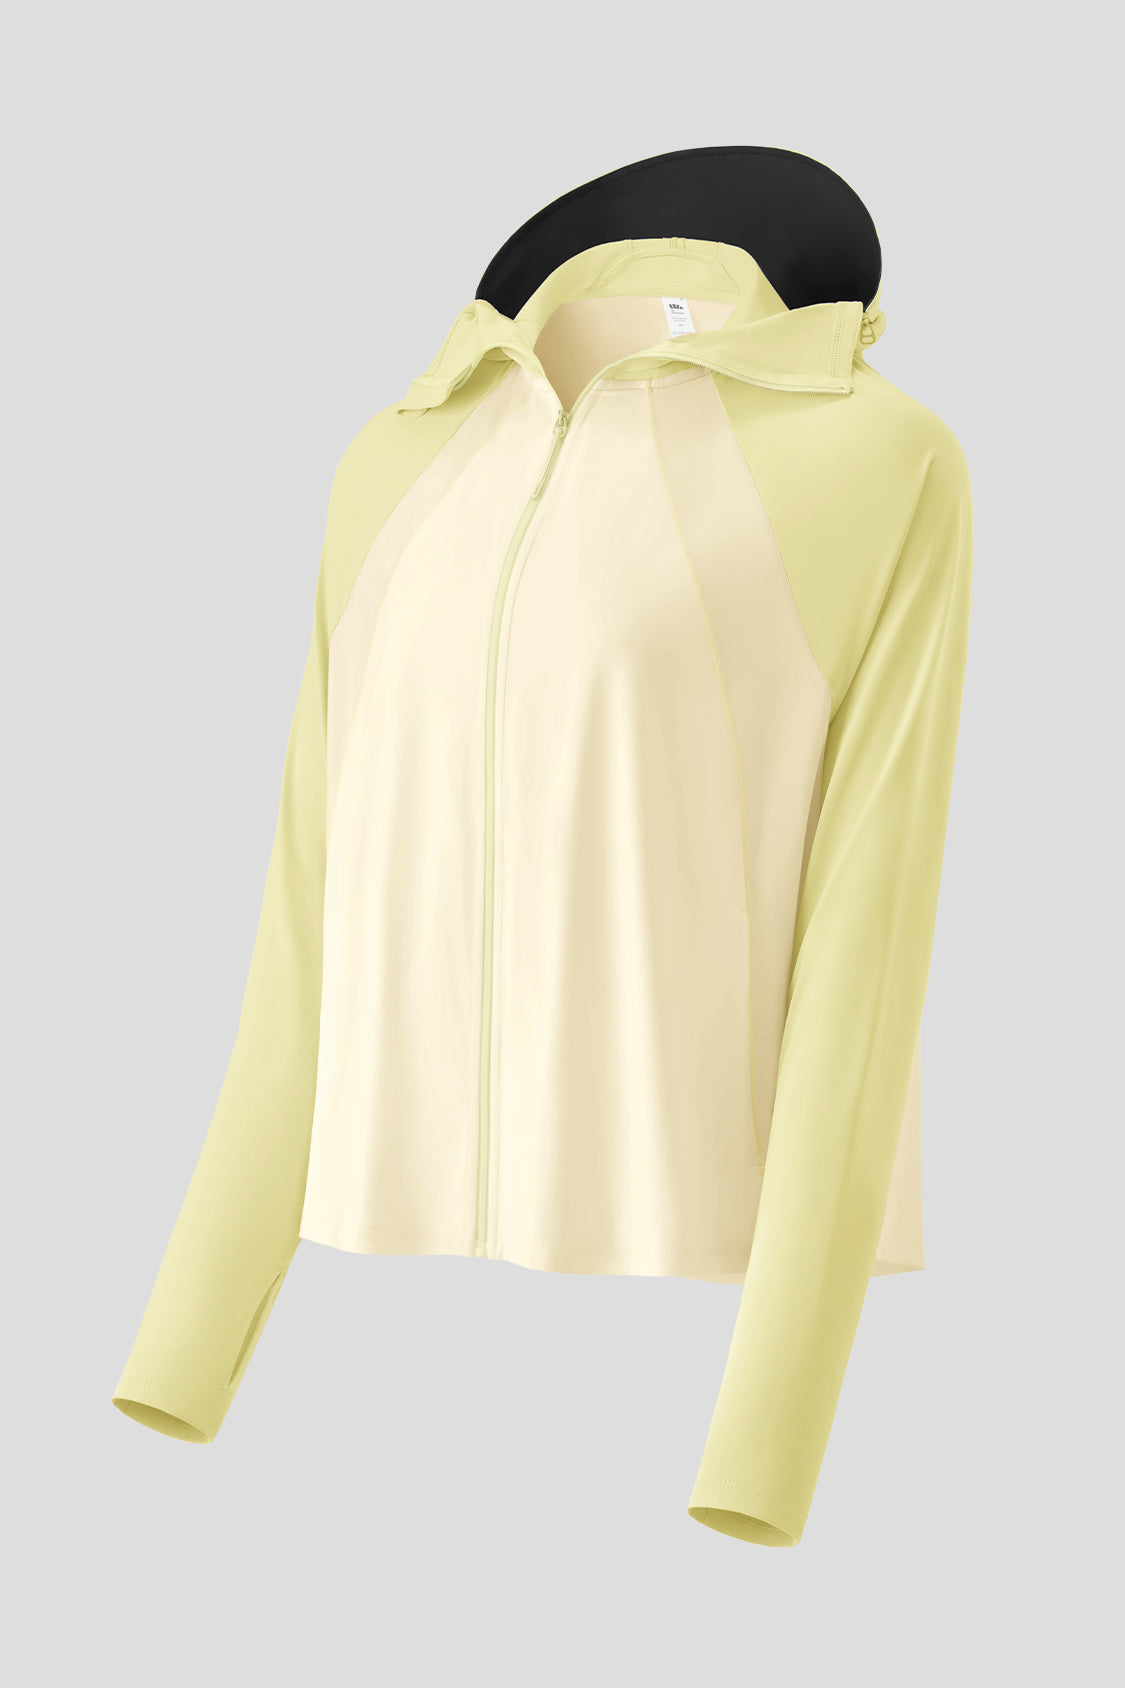 beneunder women's sun wear upf50+ #color_light goose yellow - cream puff yellow